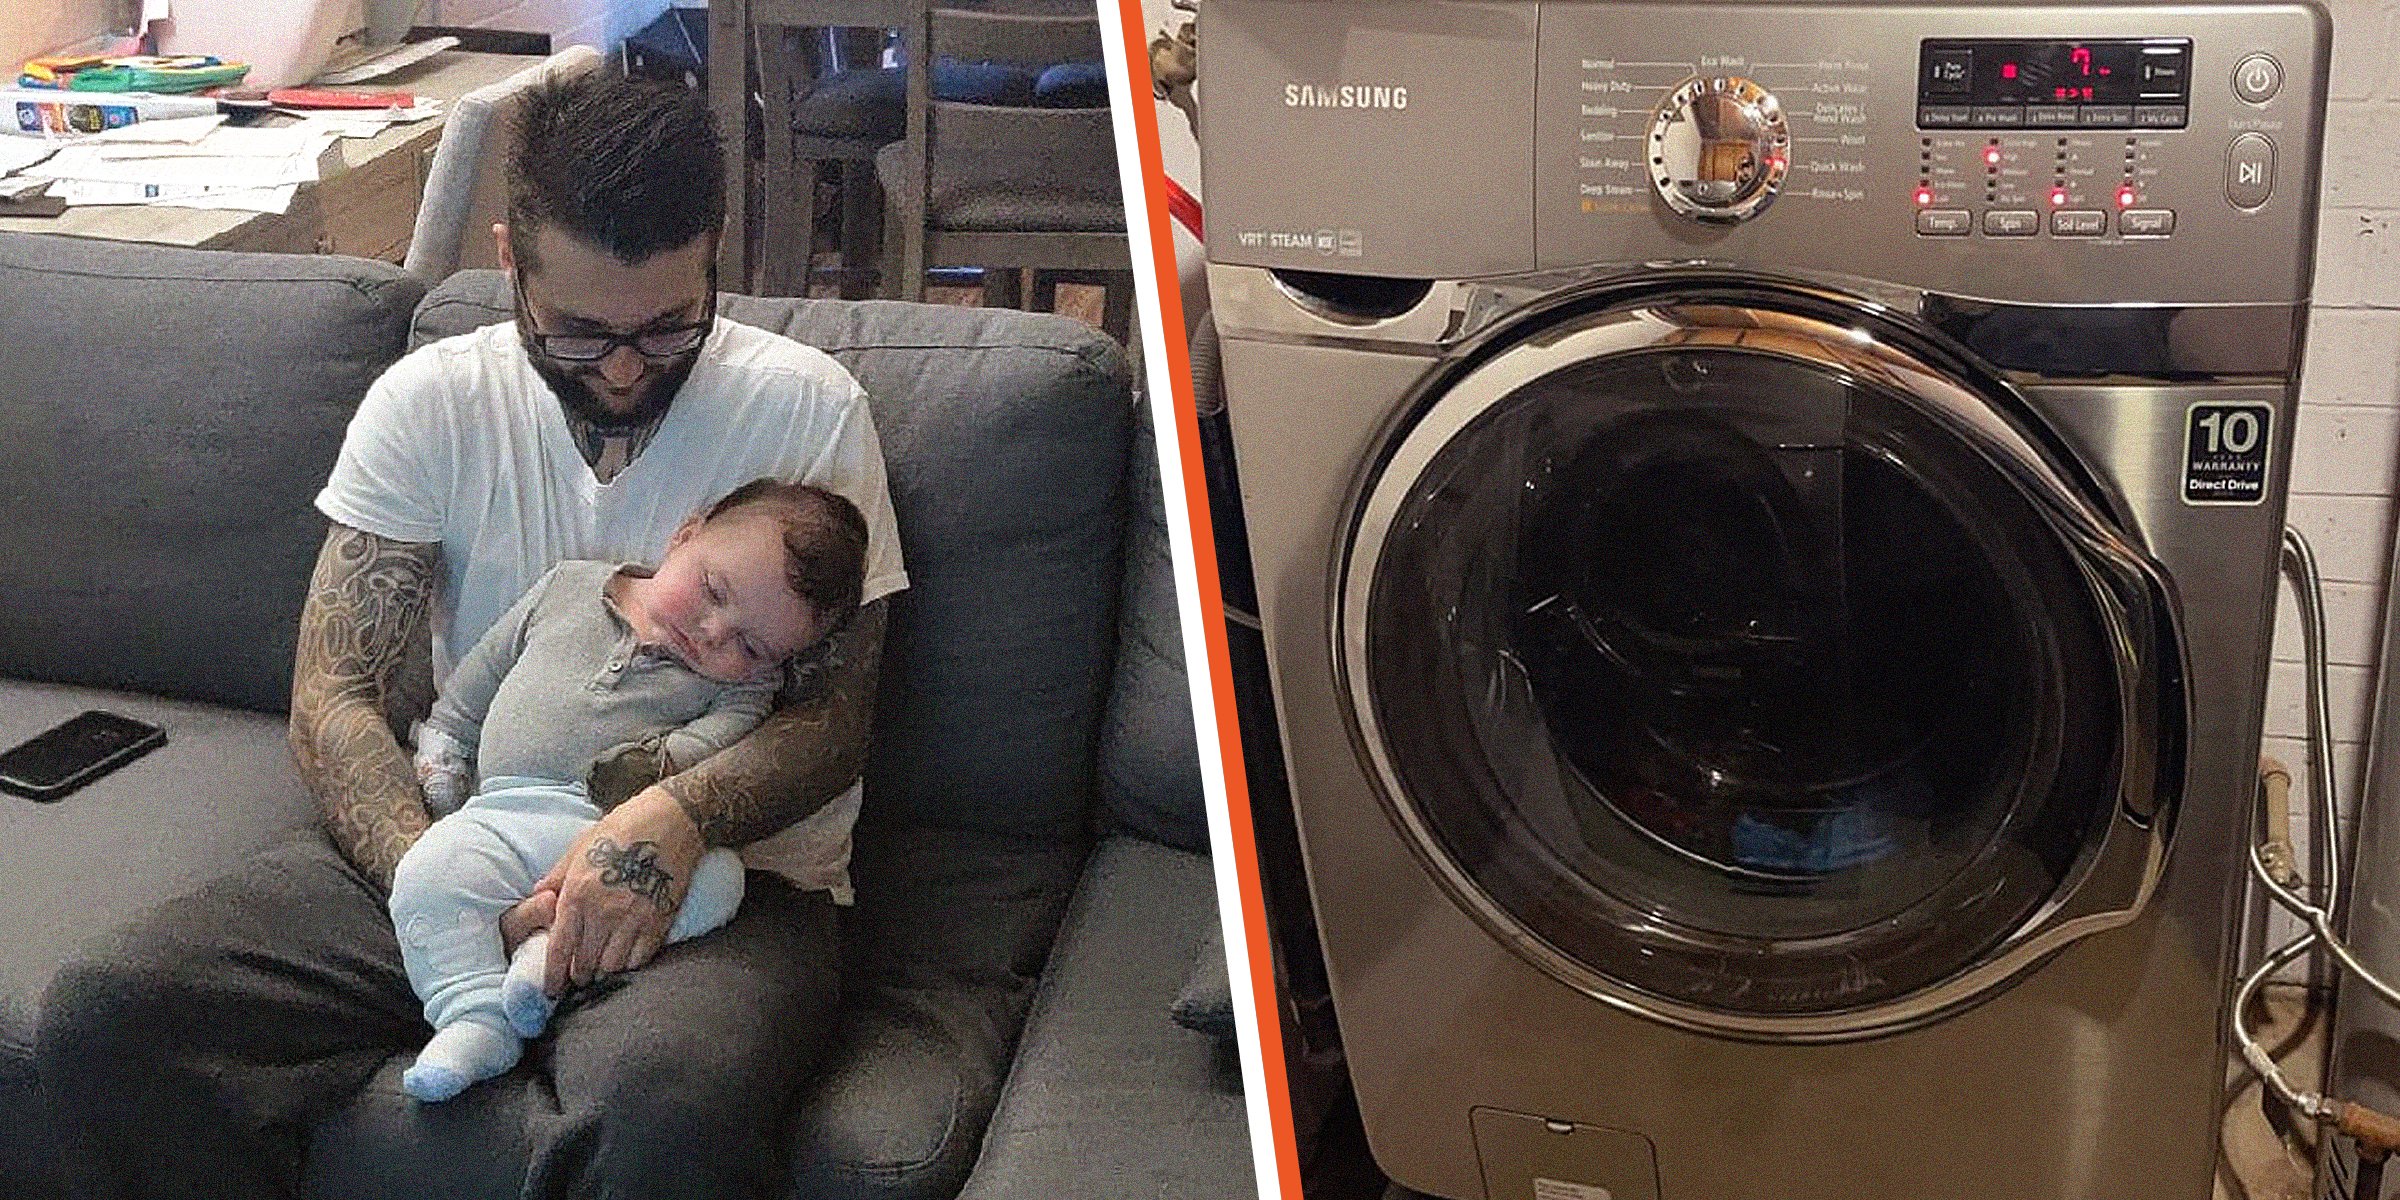 Chris Blaze with his baby | The washing machine he bought | Source: Facebook.com/Blaze520Az